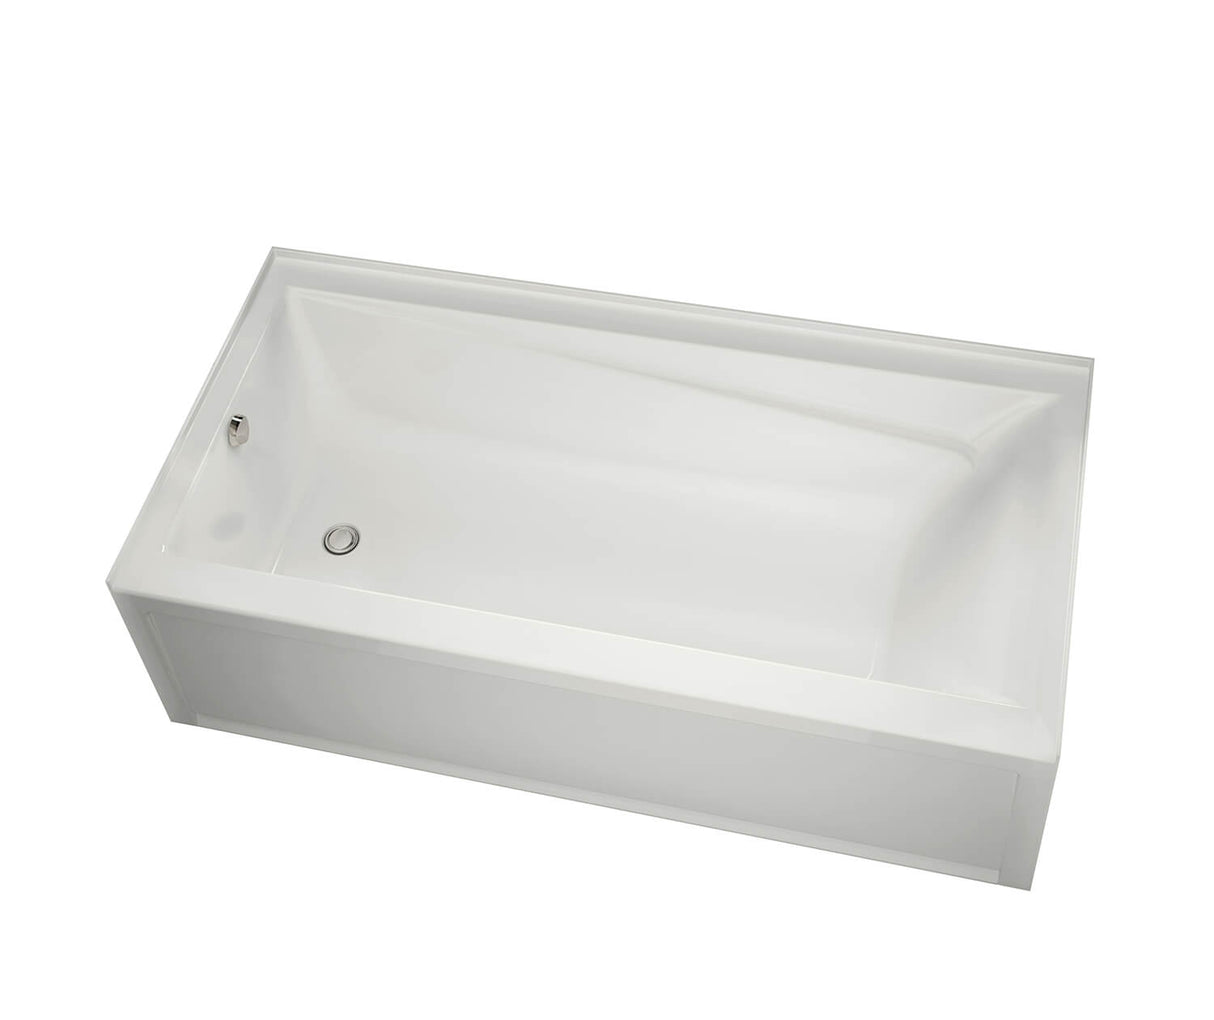 MAAX 105454-108-001-002 New Town 6030 IFS Acrylic Alcove Right-Hand Drain Aerosens Bathtub in White